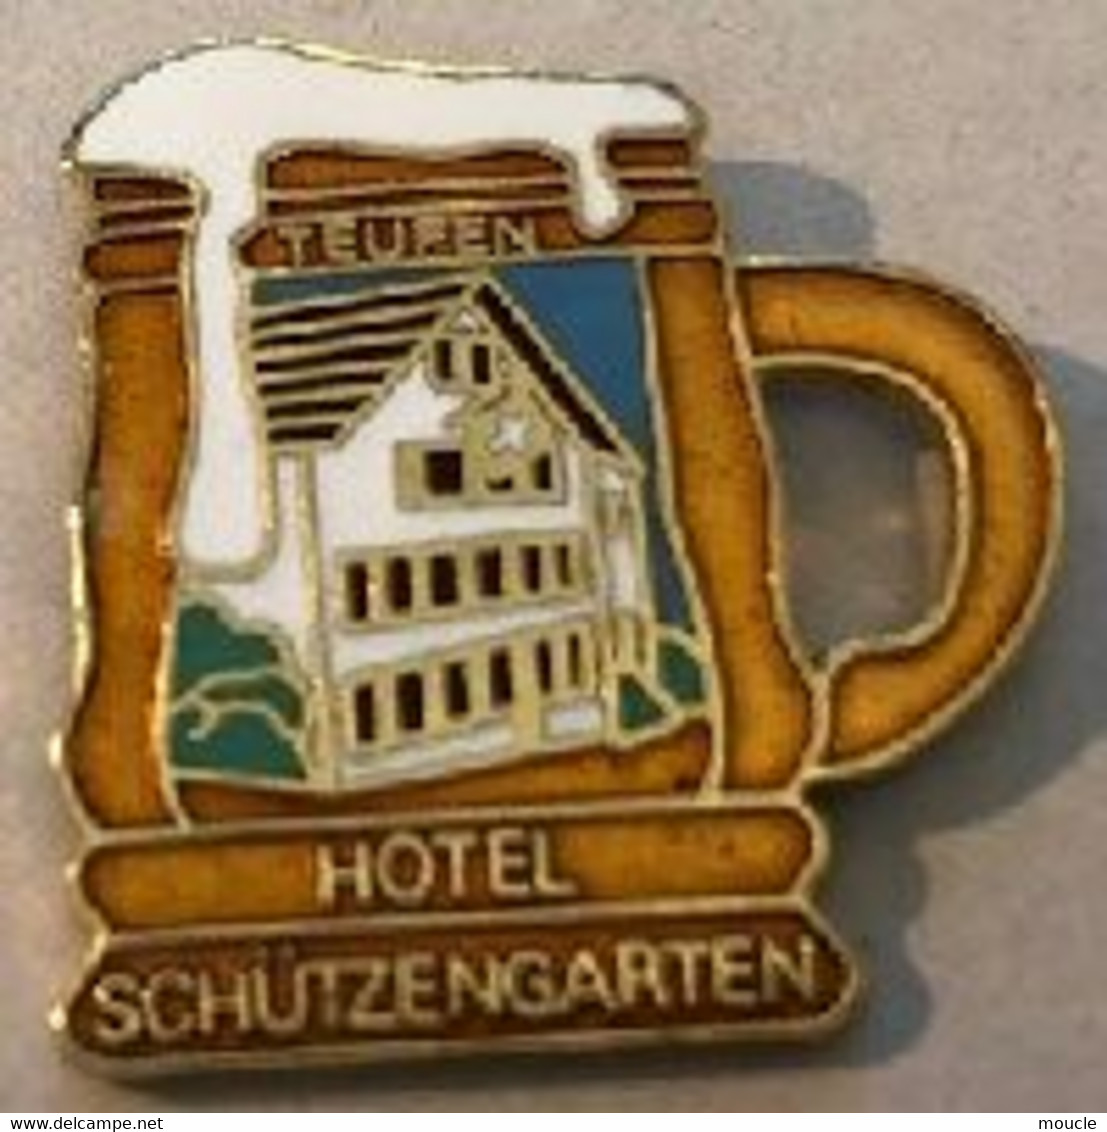 HÔTEL SCHÜTZENGARTEN - CHOPPE - BIER  BIERE- SUISSE - SCHWEIZ - SWITZERLAND - SVIZZERA - TEUFEN - EGF - BEER -  (30) - Bier